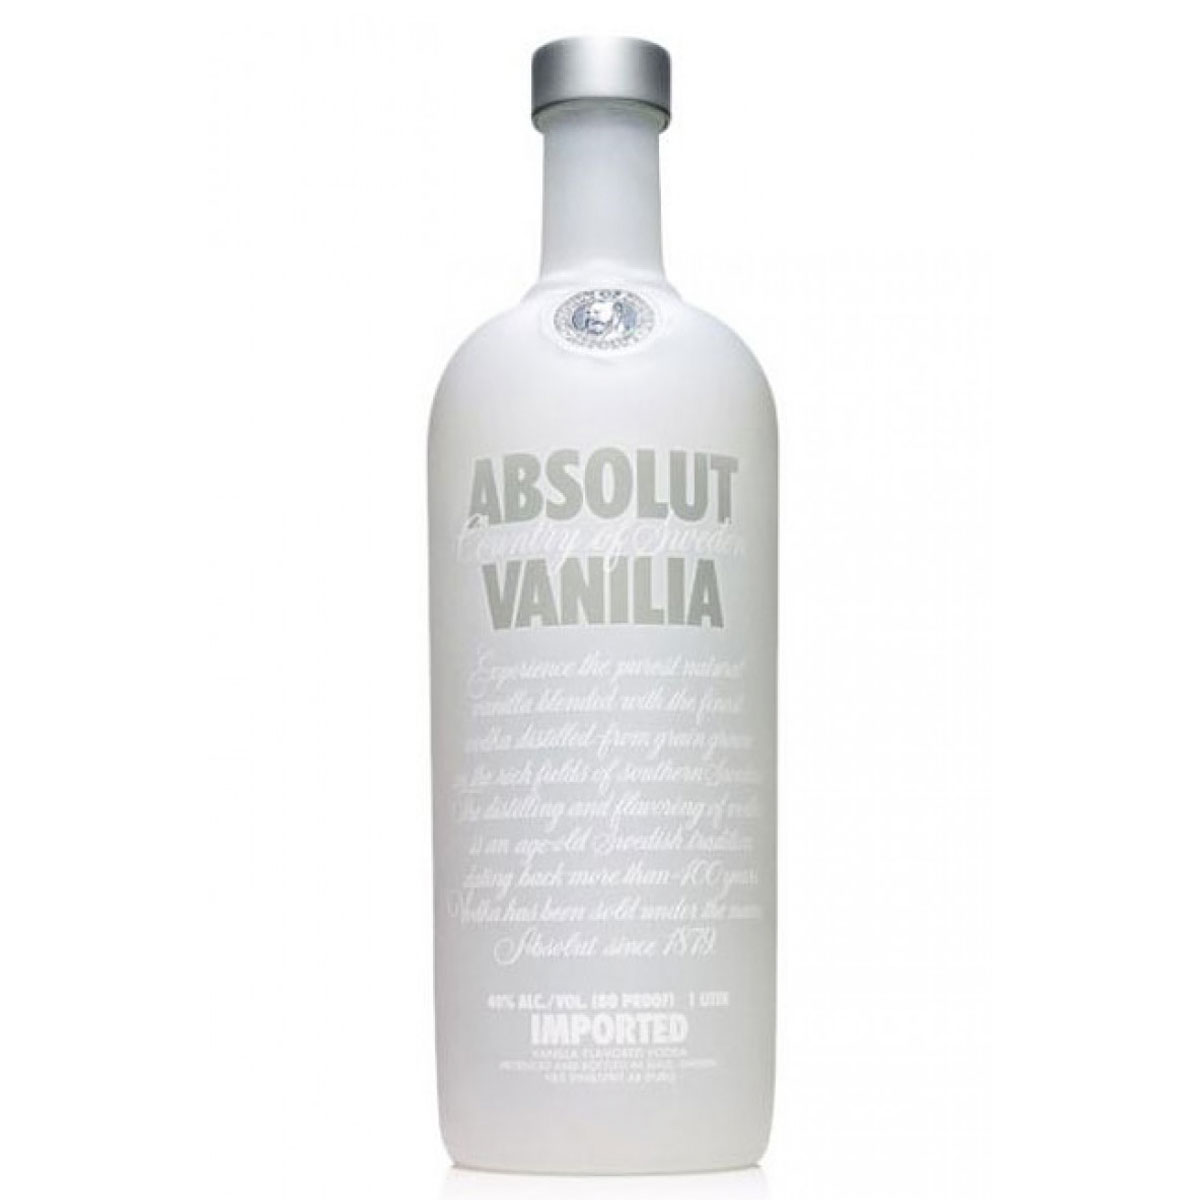 a bottle of absolut vodka vanilia